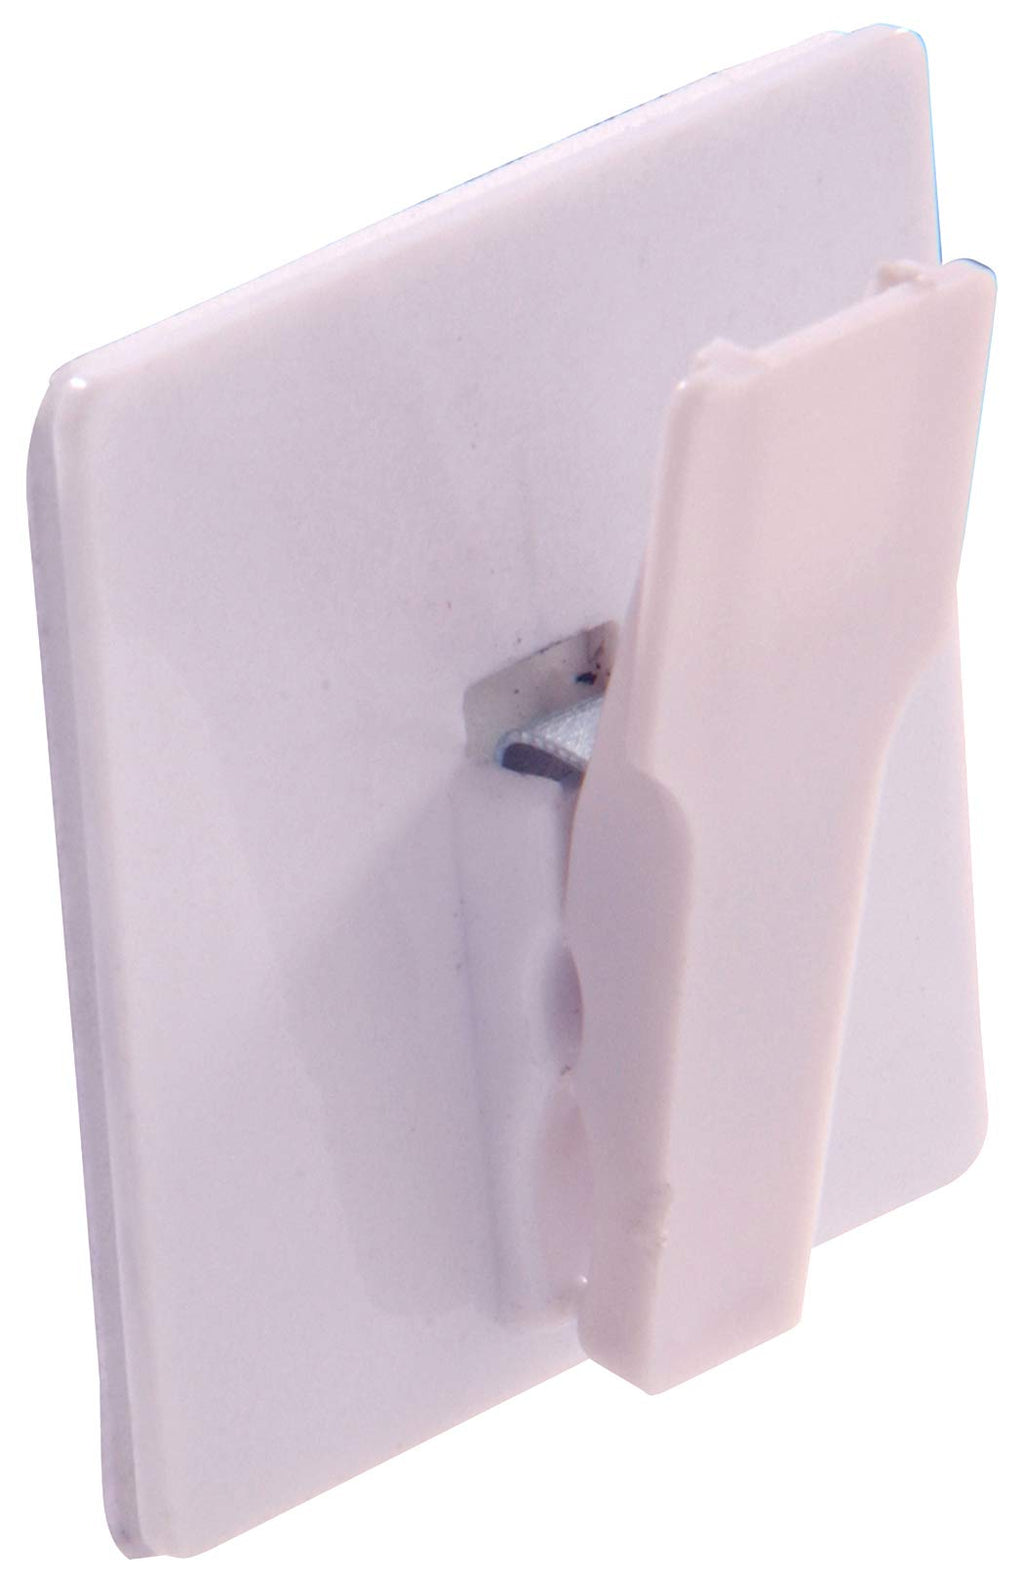  [AUSTRALIA] - Hillman Hardware Essentials 852987 Spring Clip Hook White Adhesive Backed 2-Pack Plastic